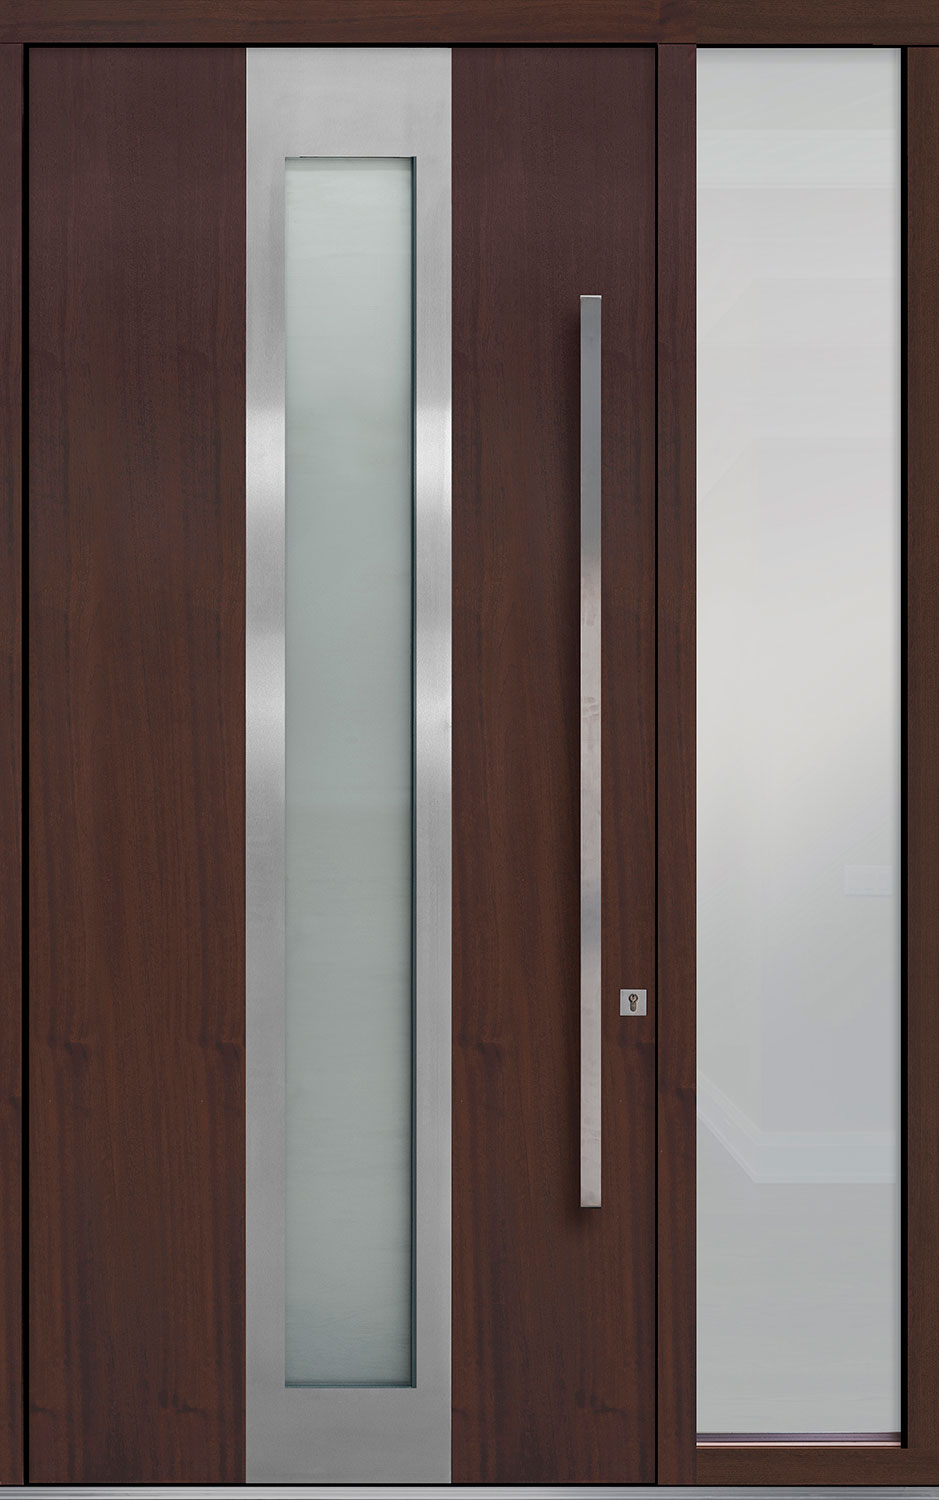 Mahogany-Wood-Veneer Solid Wood Front Entry Door - Single with 1 Sidelite